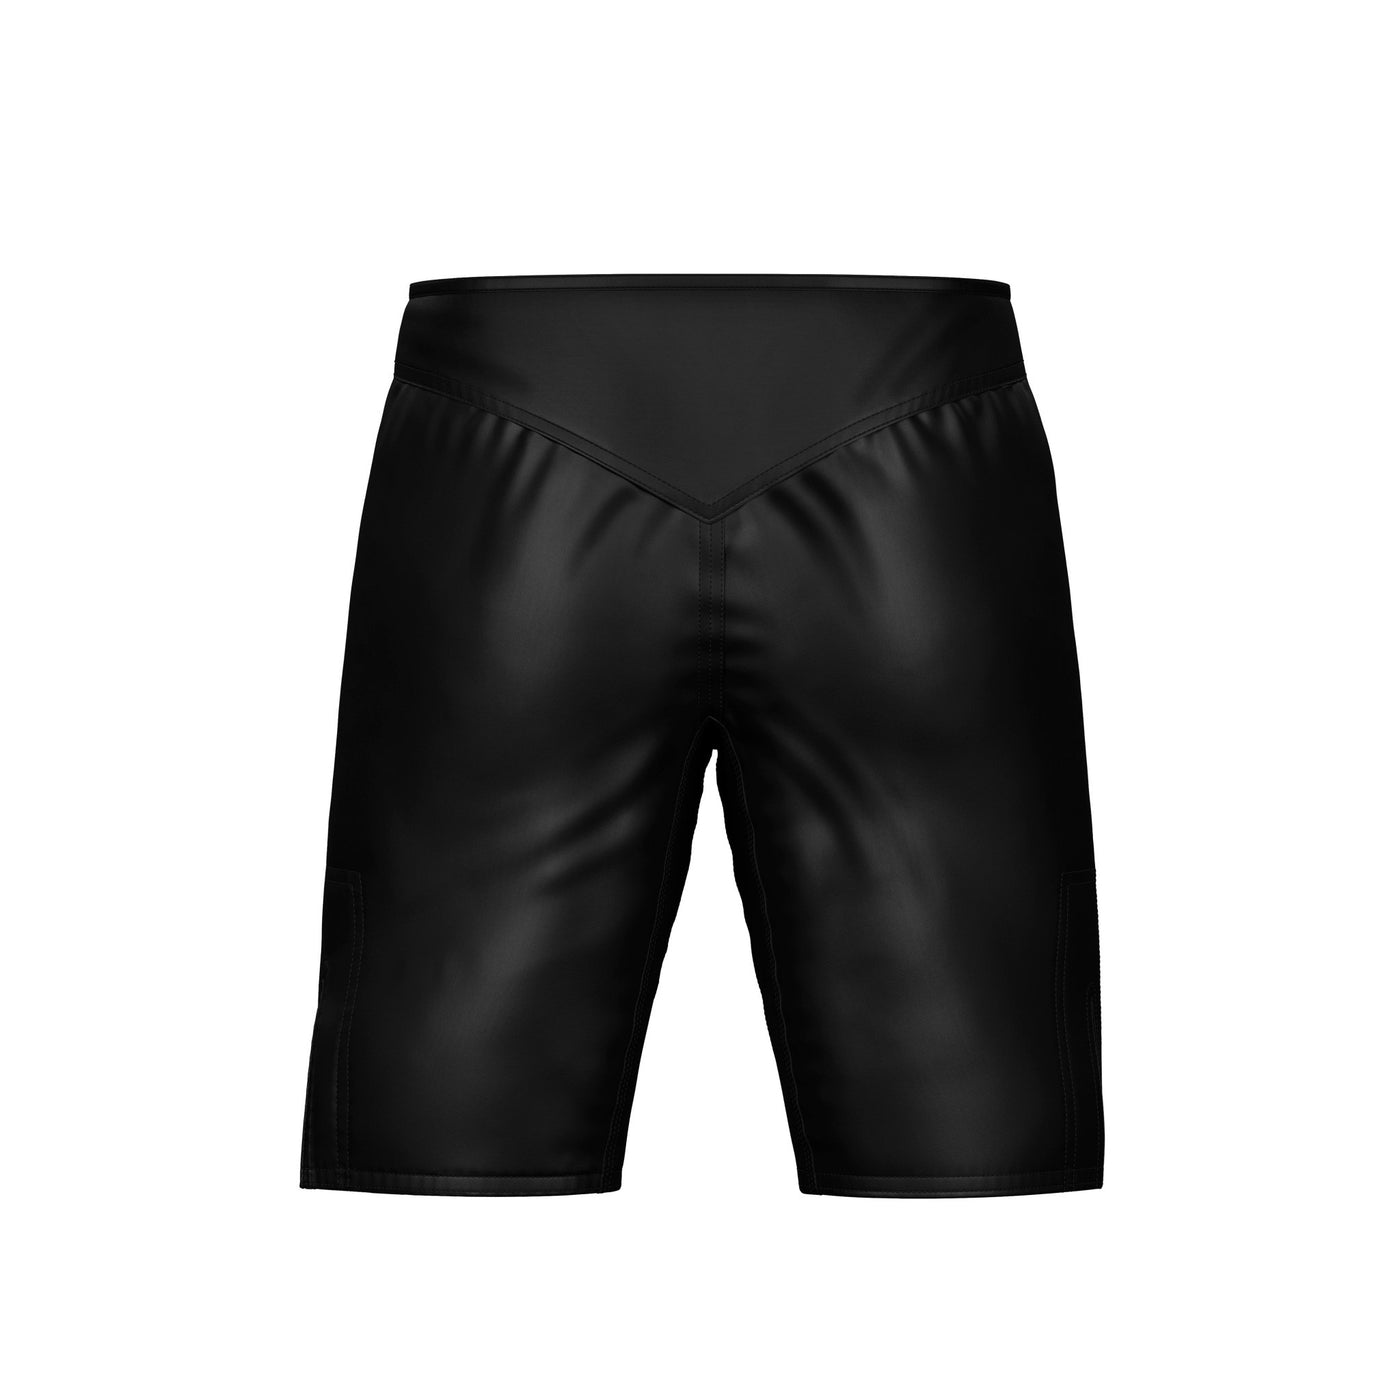 Custom Black MMA Shorts - Summo Sports